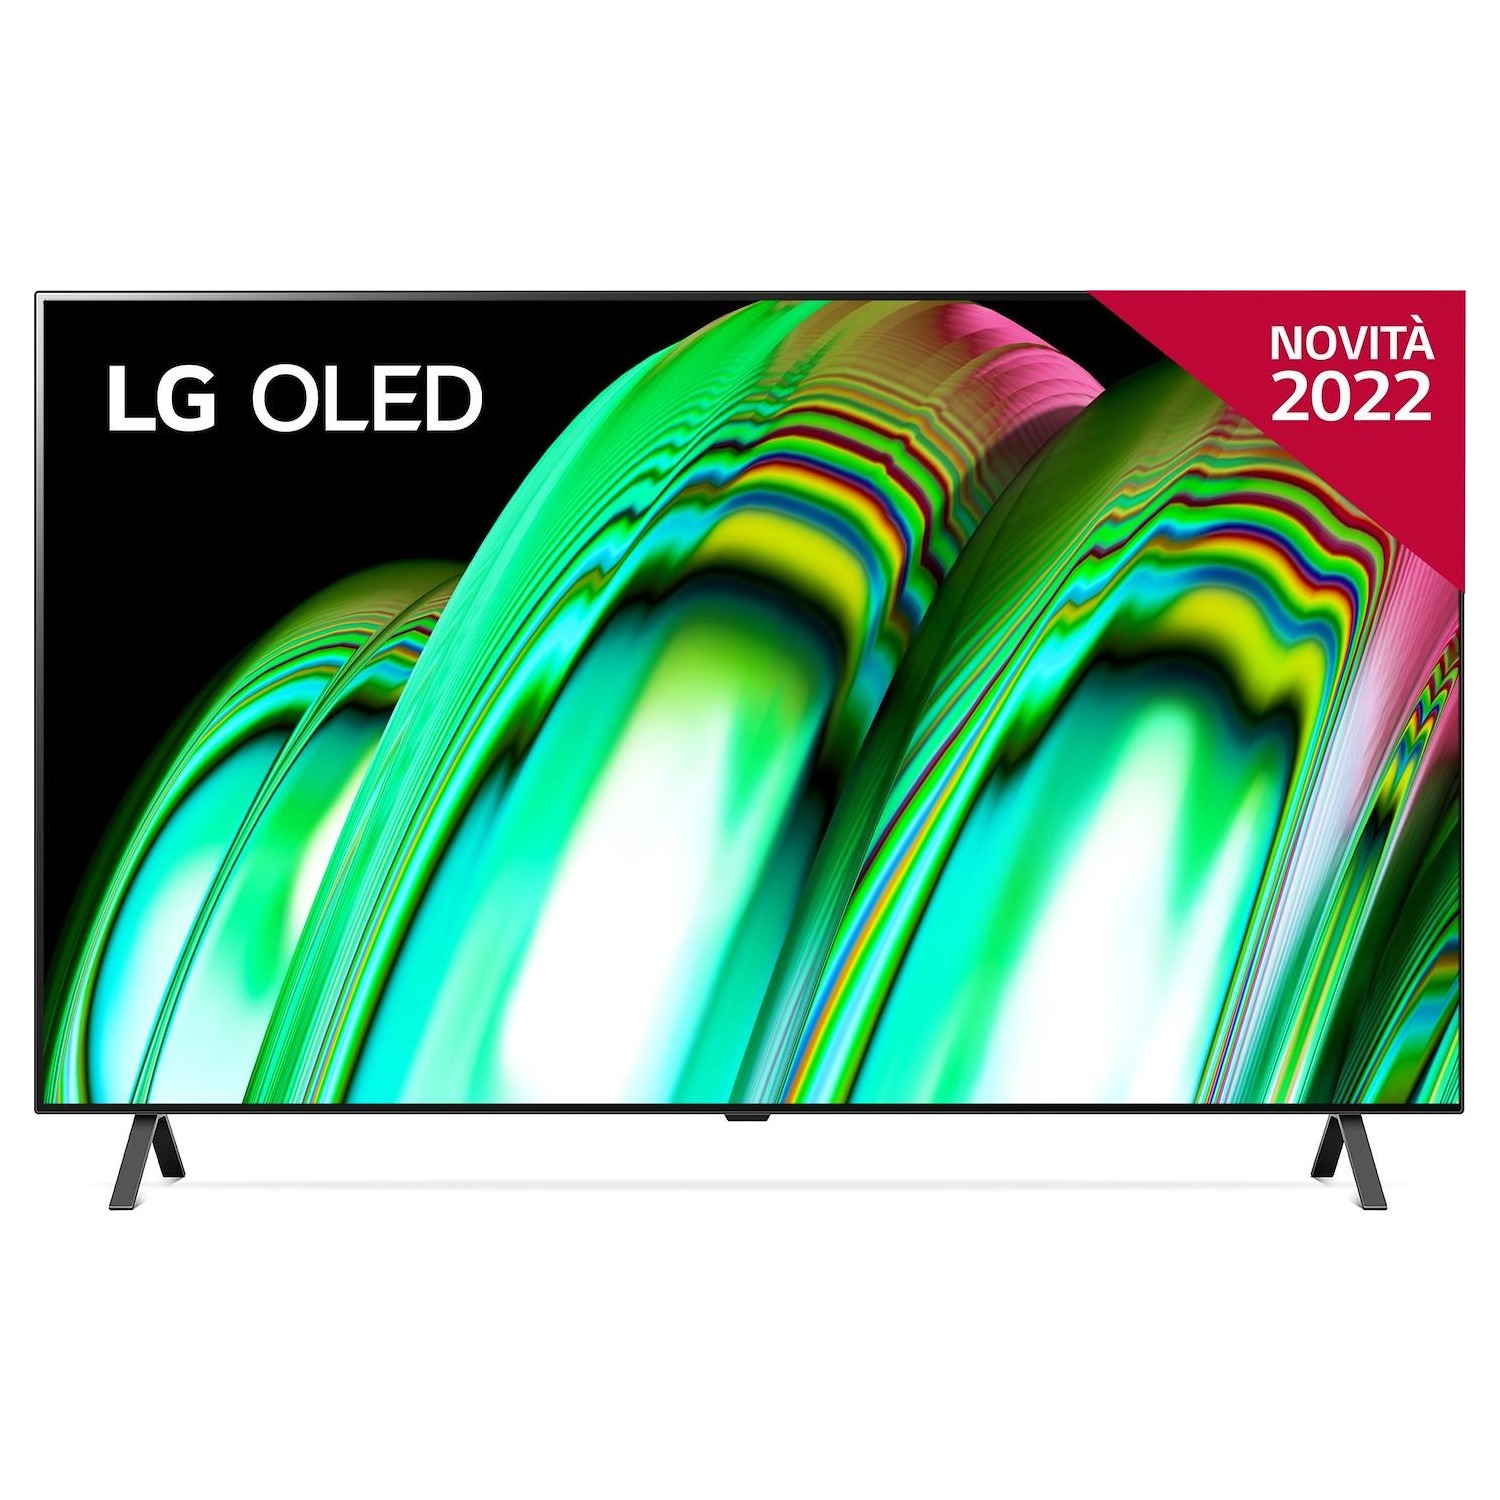 Immagine per TV OLED LG OLED48A26 Calibrato 4K e FULL HD da DIMOStore